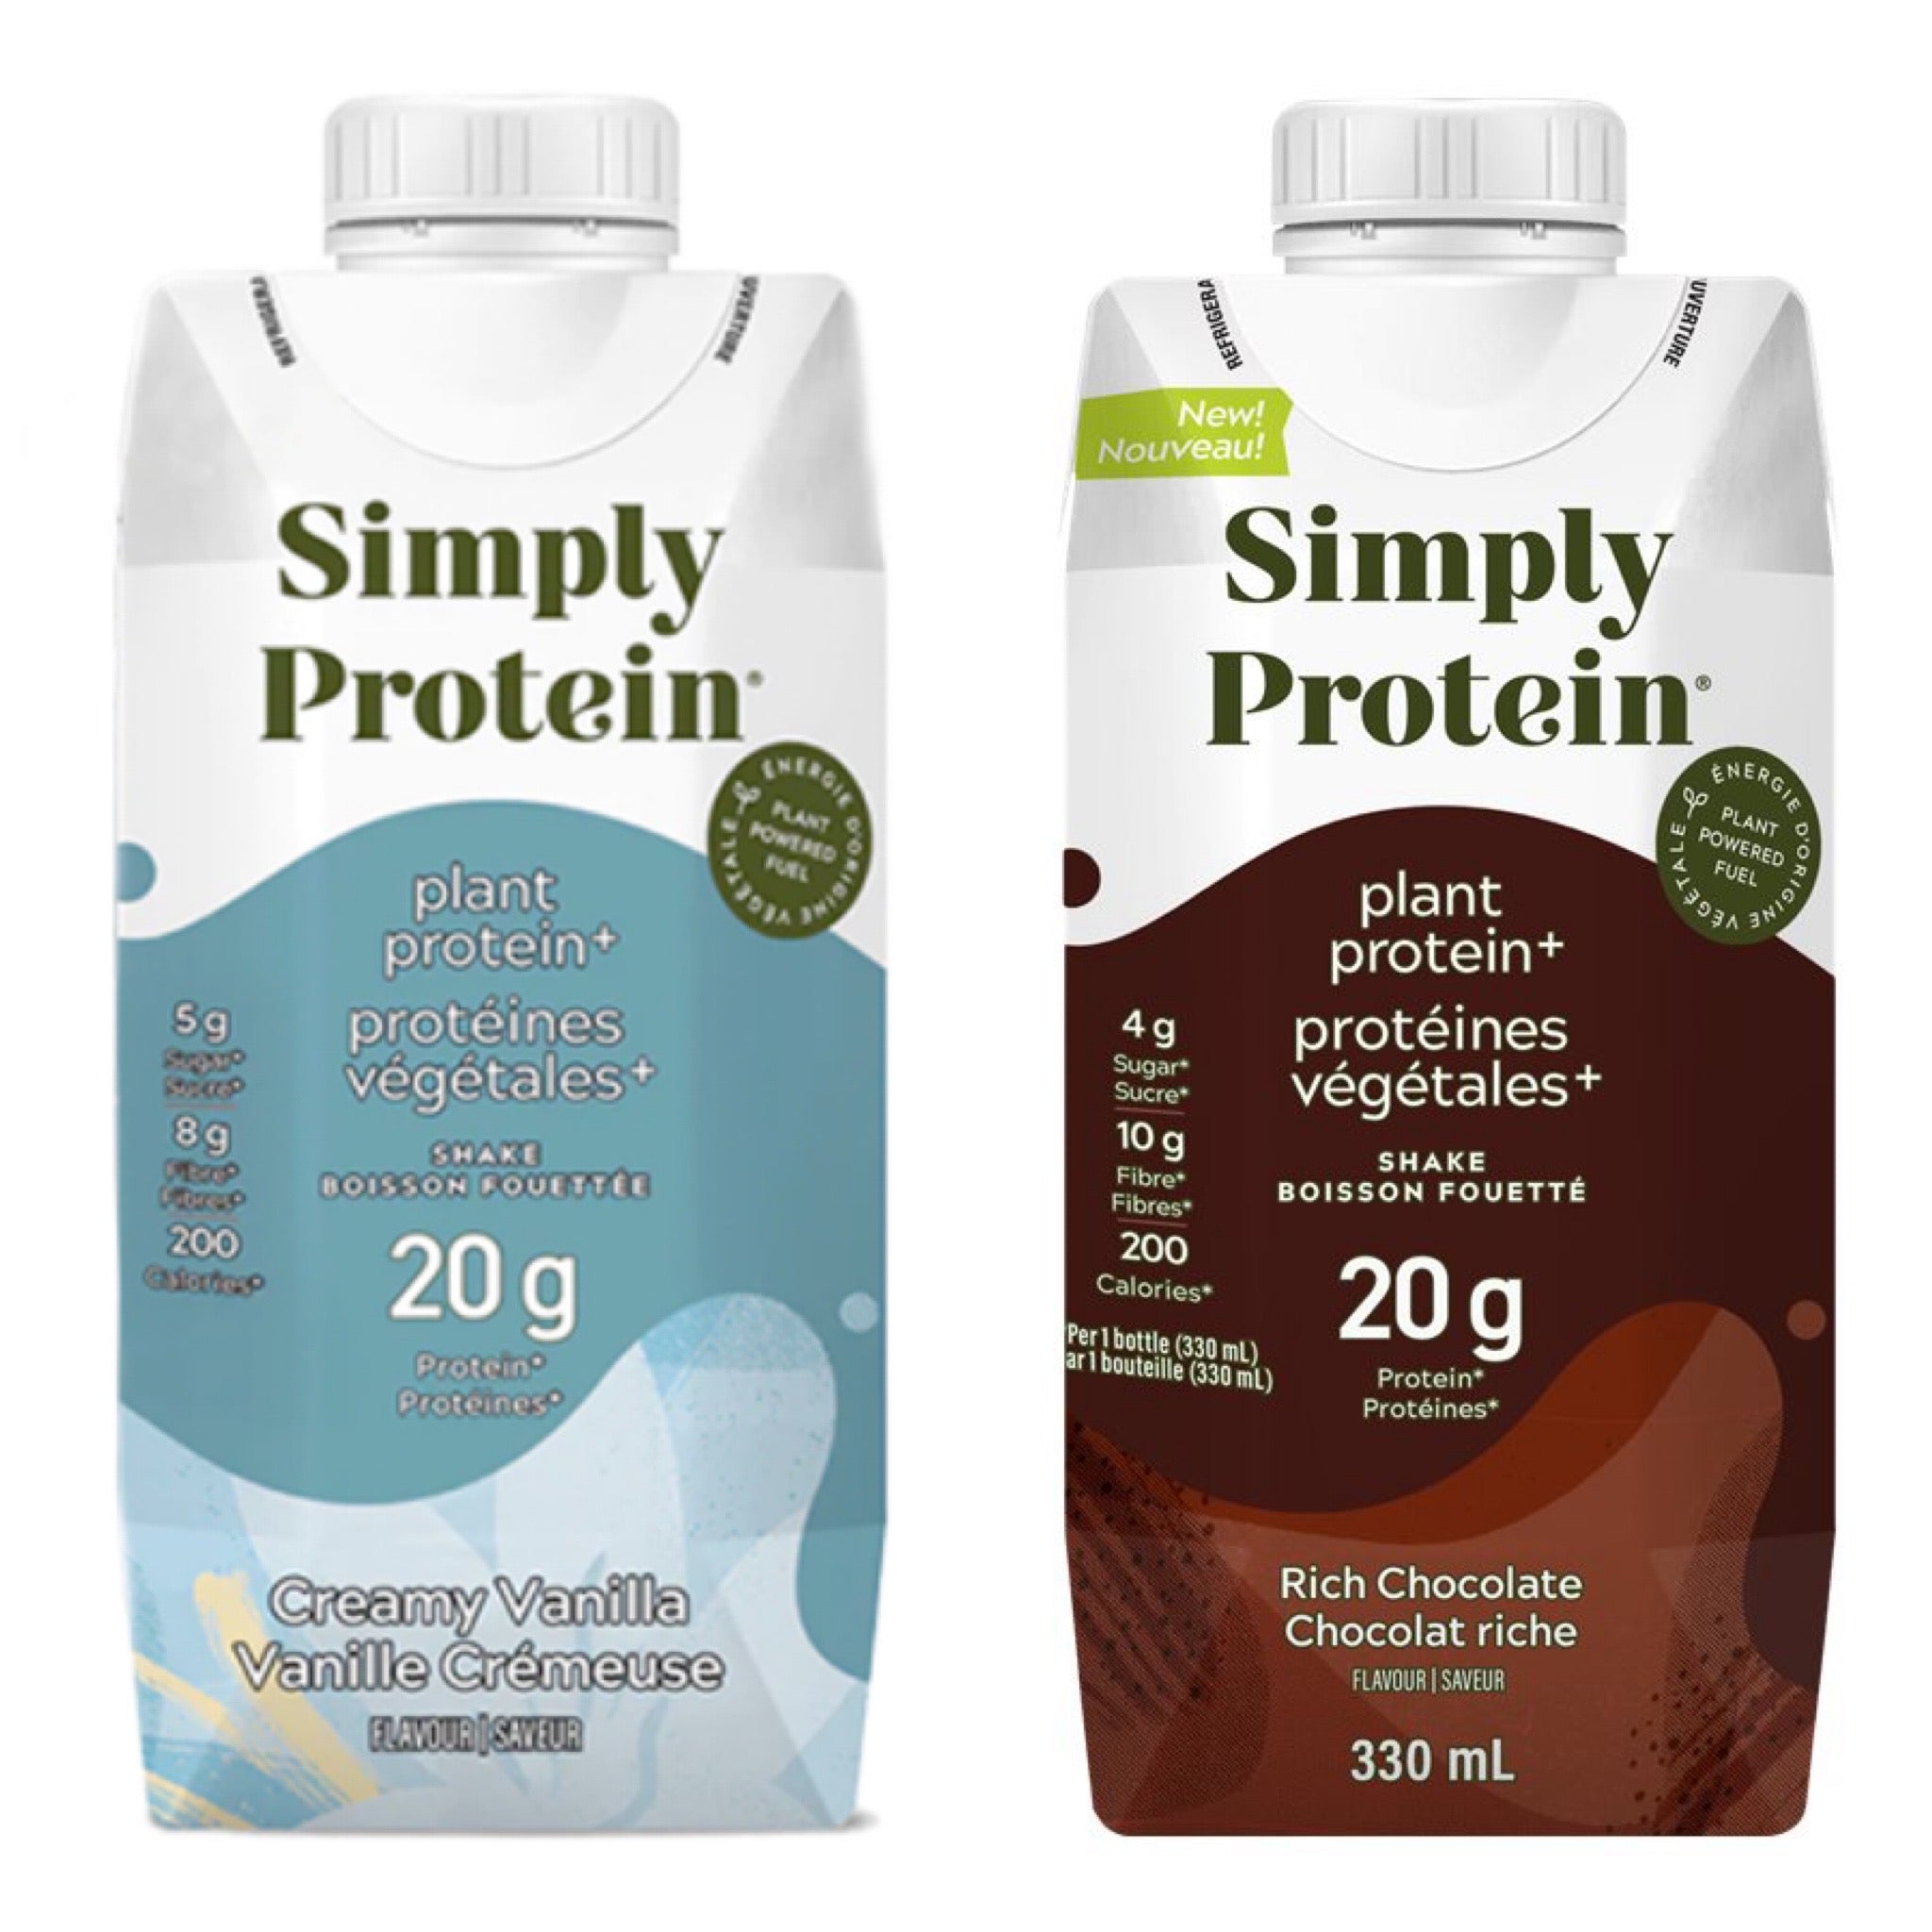 SimplyProtein Plant Protein+ Shake (330 ml) Drink Rich Chocolate,Creamy Vanilla SimplyProtein simplyprotein-plant-protein-shake-330-ml